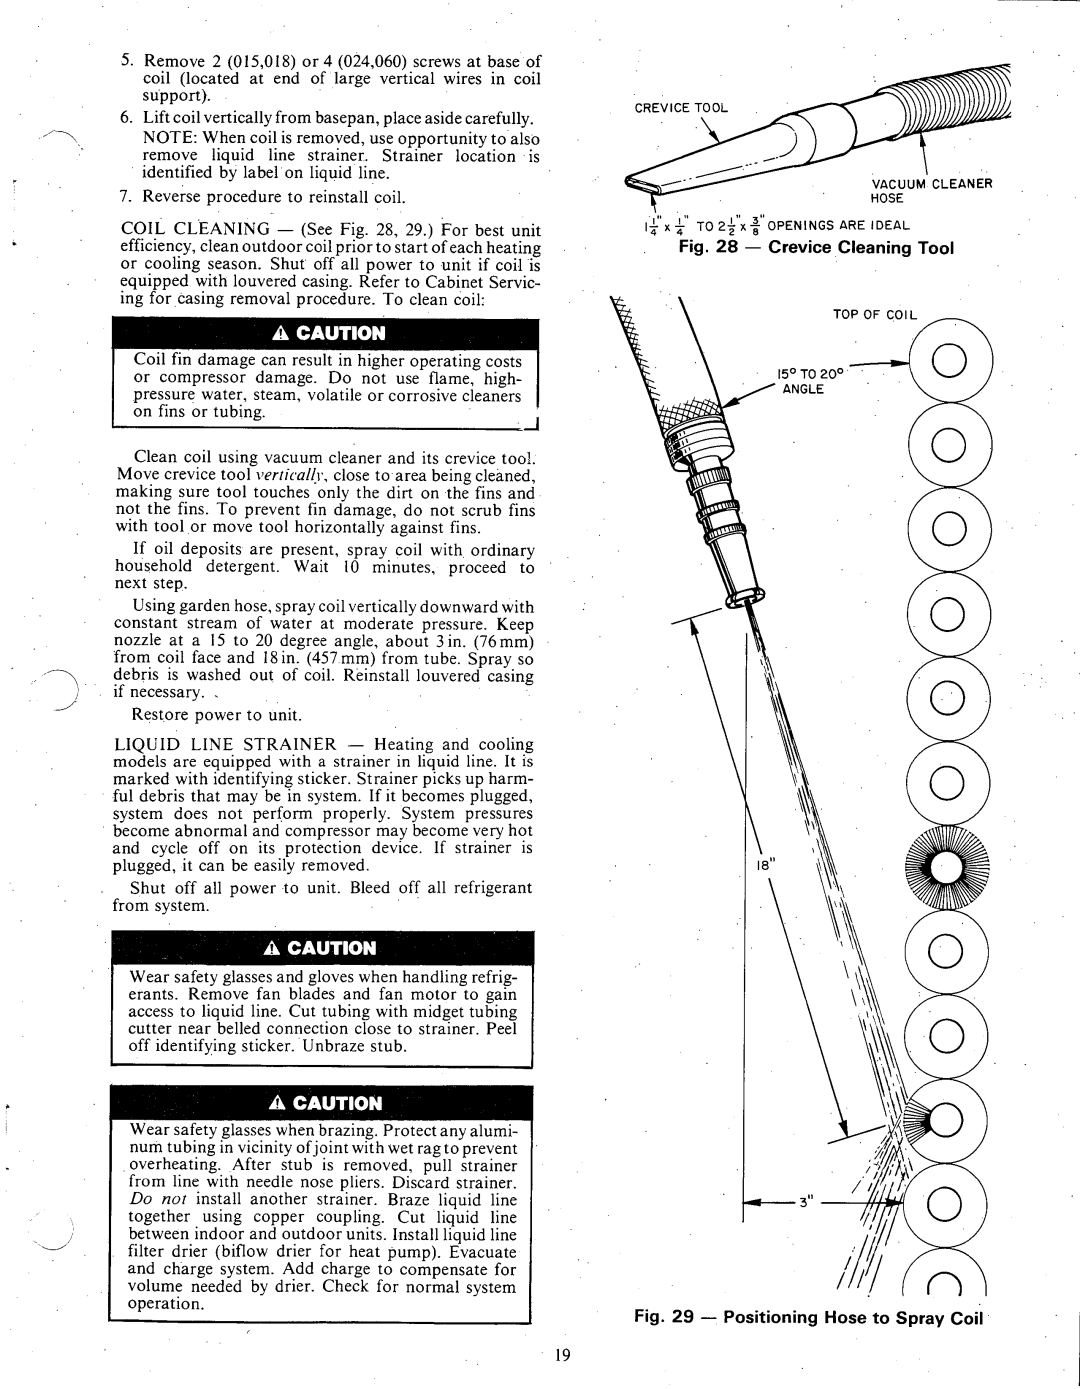 Carrier 38E manual 